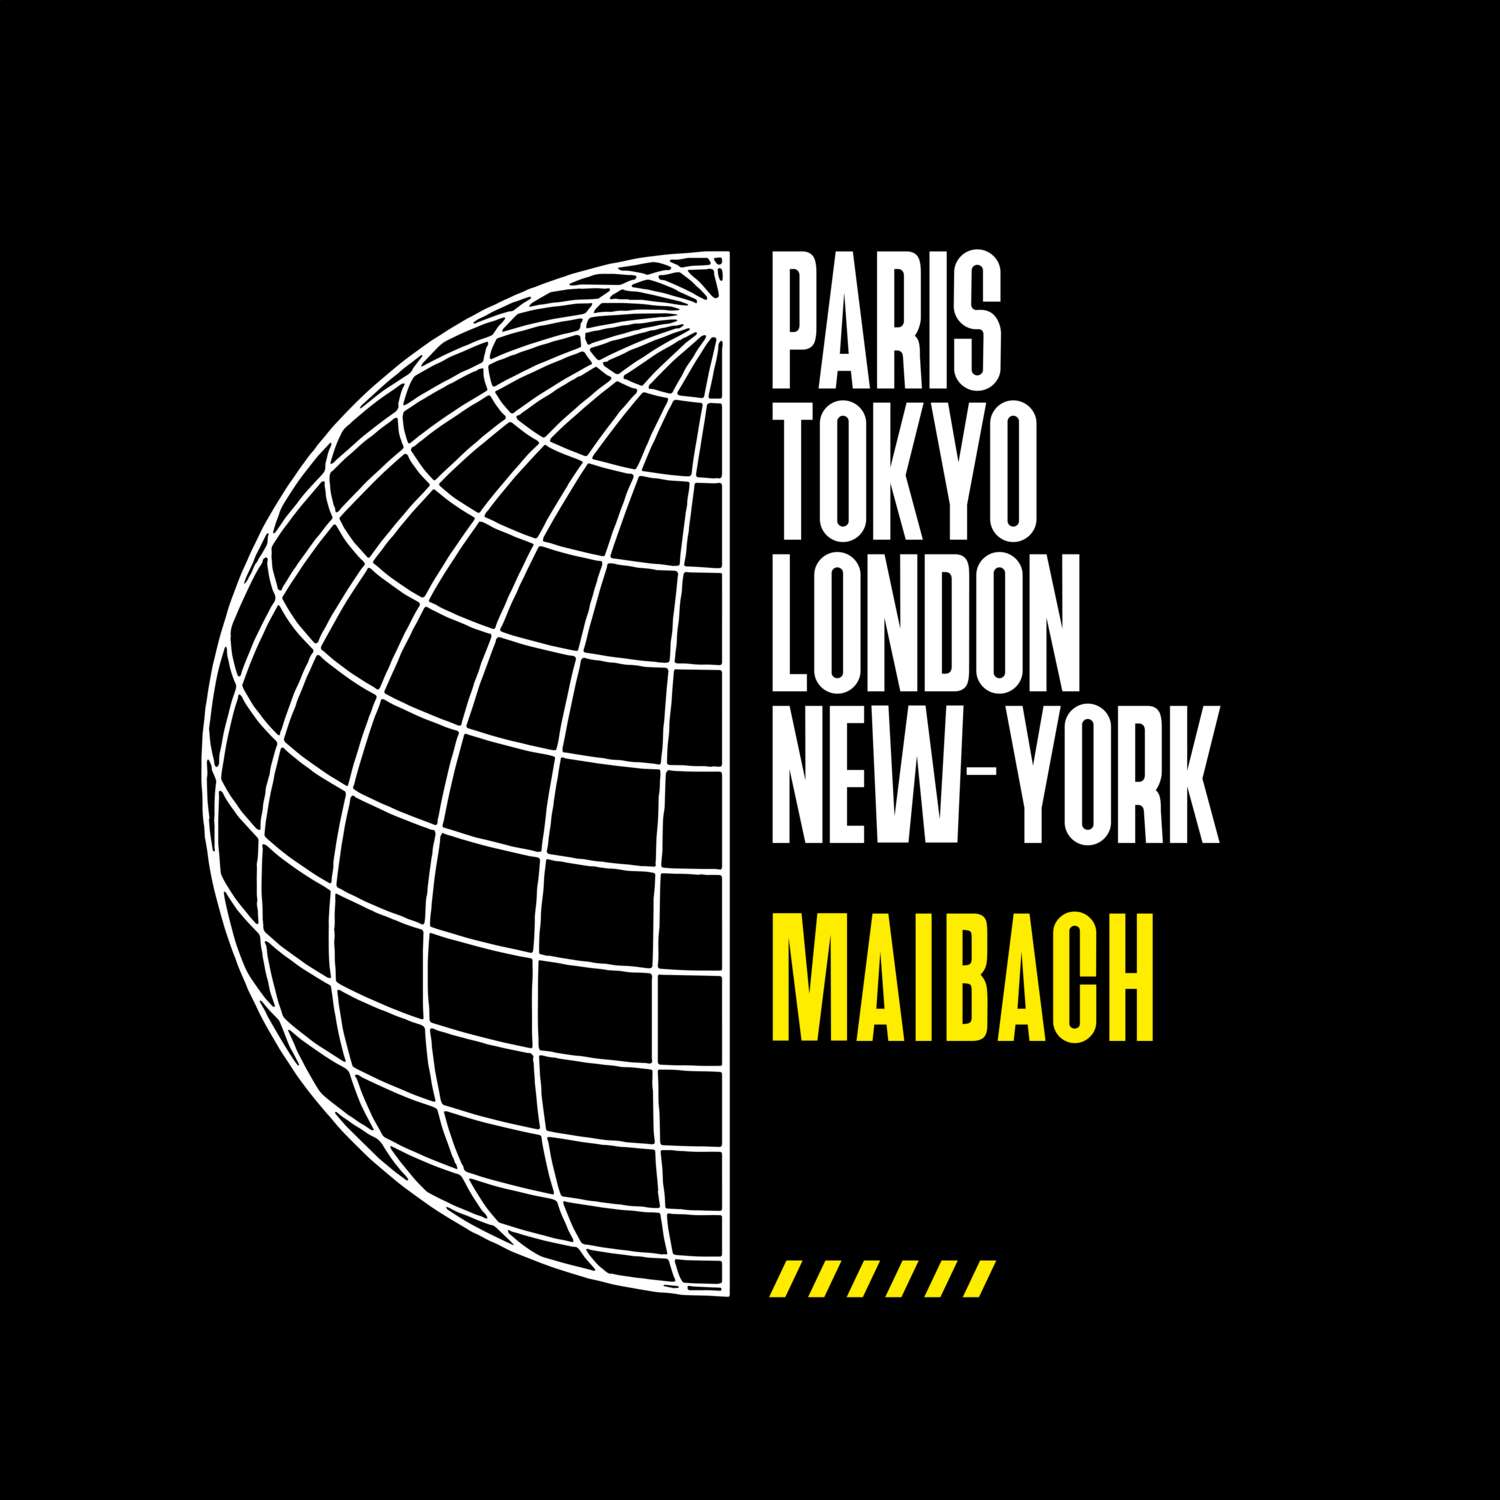 Maibach T-Shirt »Paris Tokyo London«